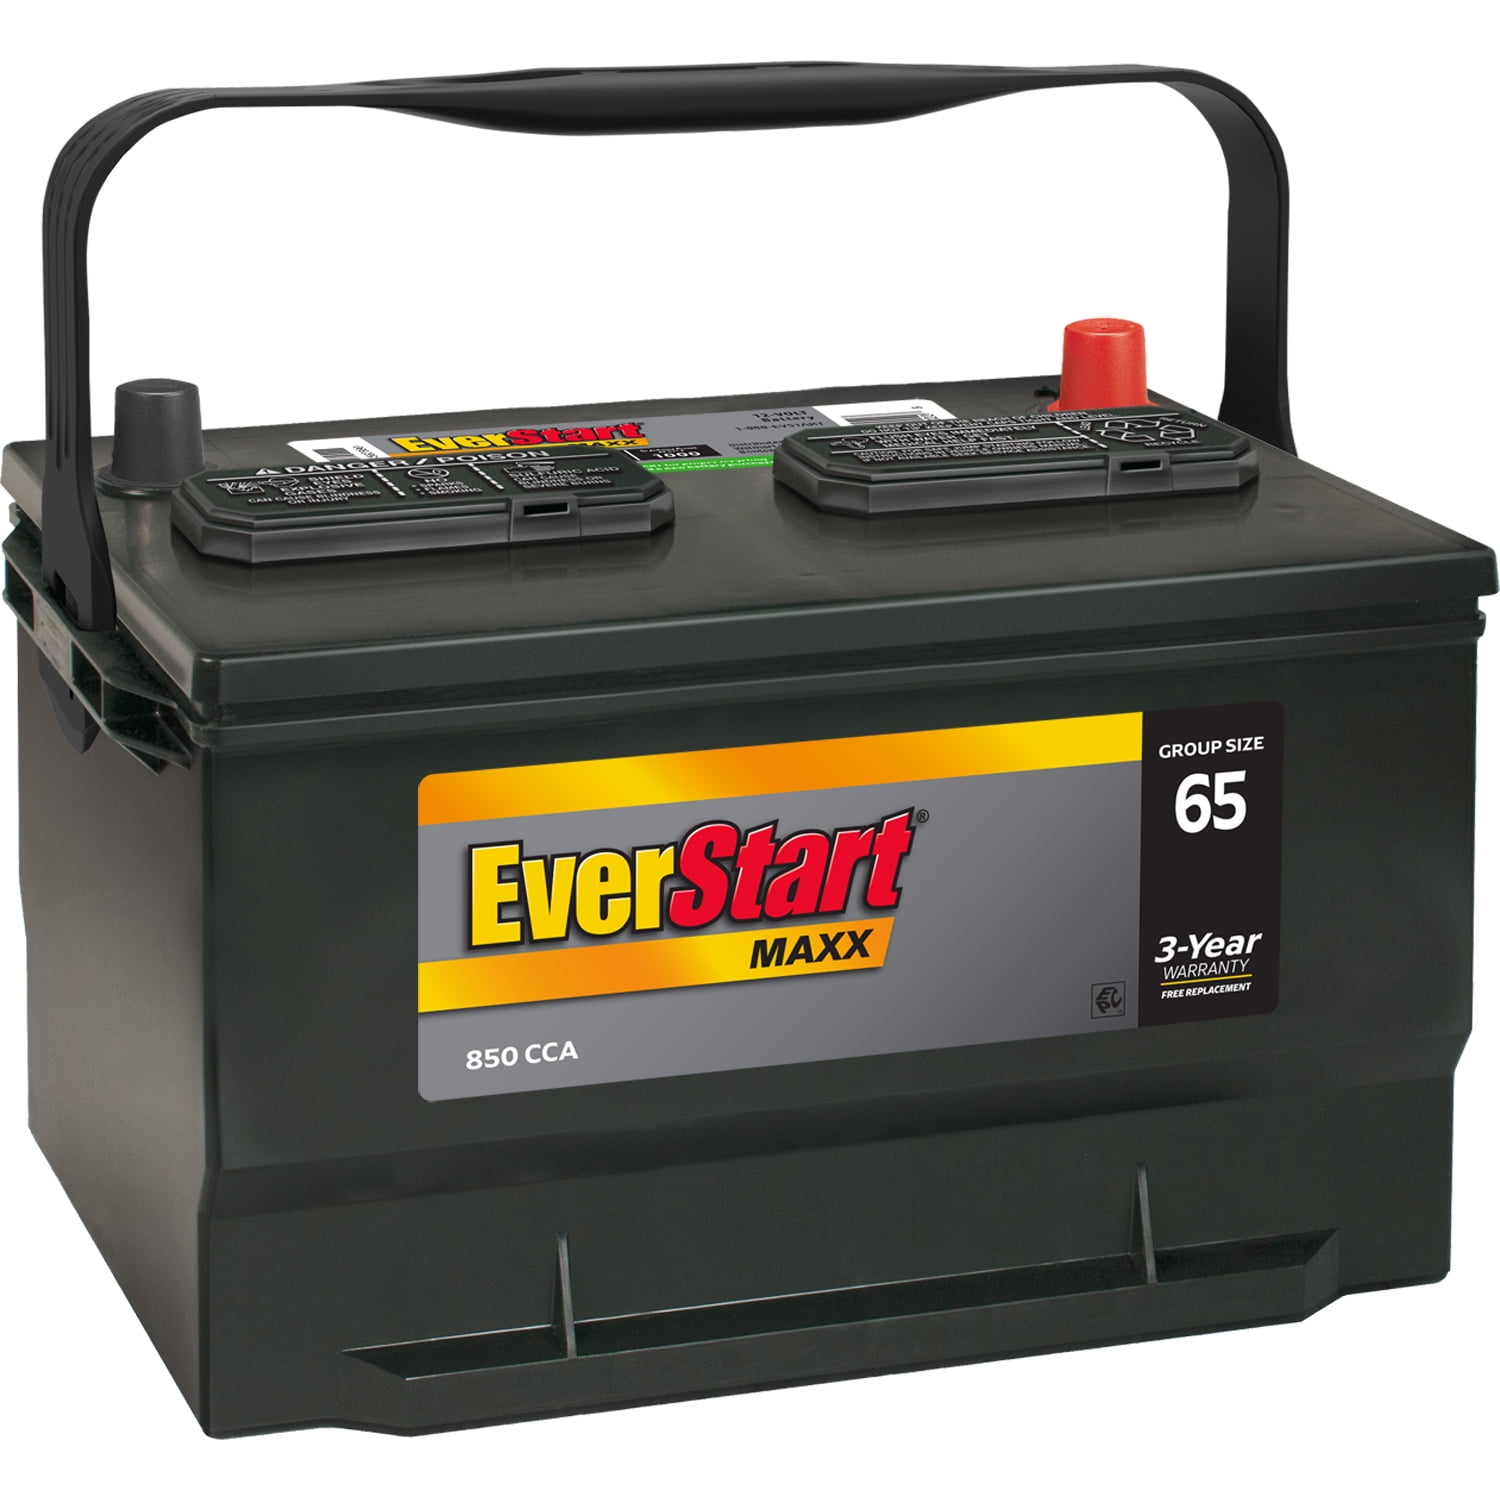 Everstart Maxx Lead Acid Automotive Battery, Group Size 65N